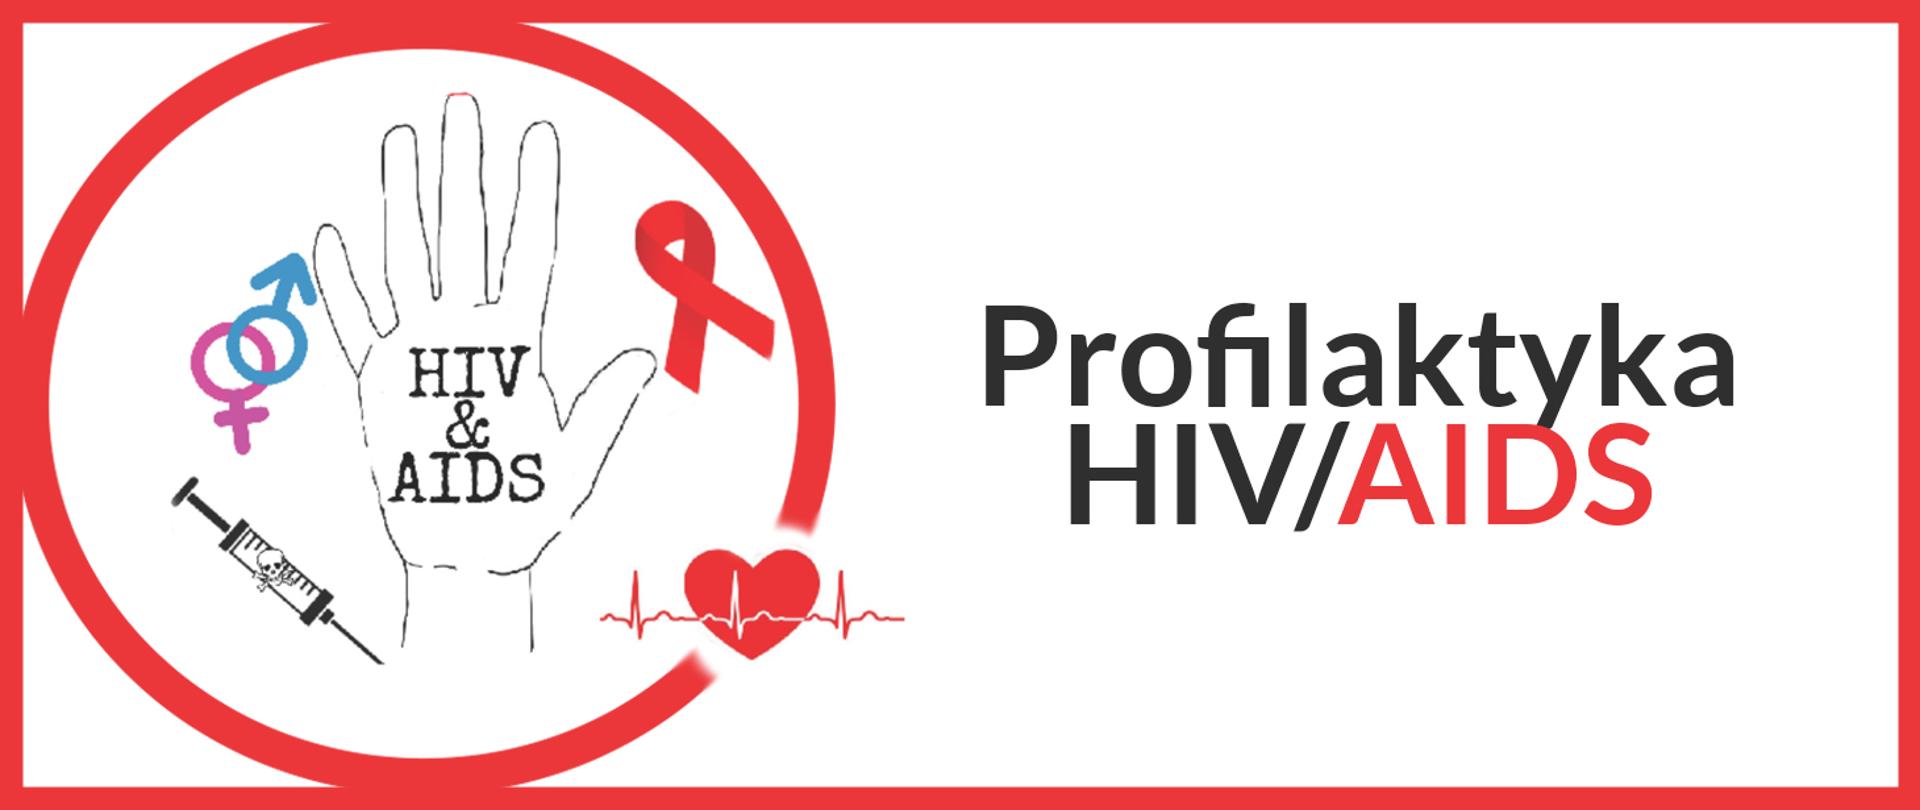 baner Profilaktyka Hiv/AIDS rysunek dłoni z napisem hiv&aids